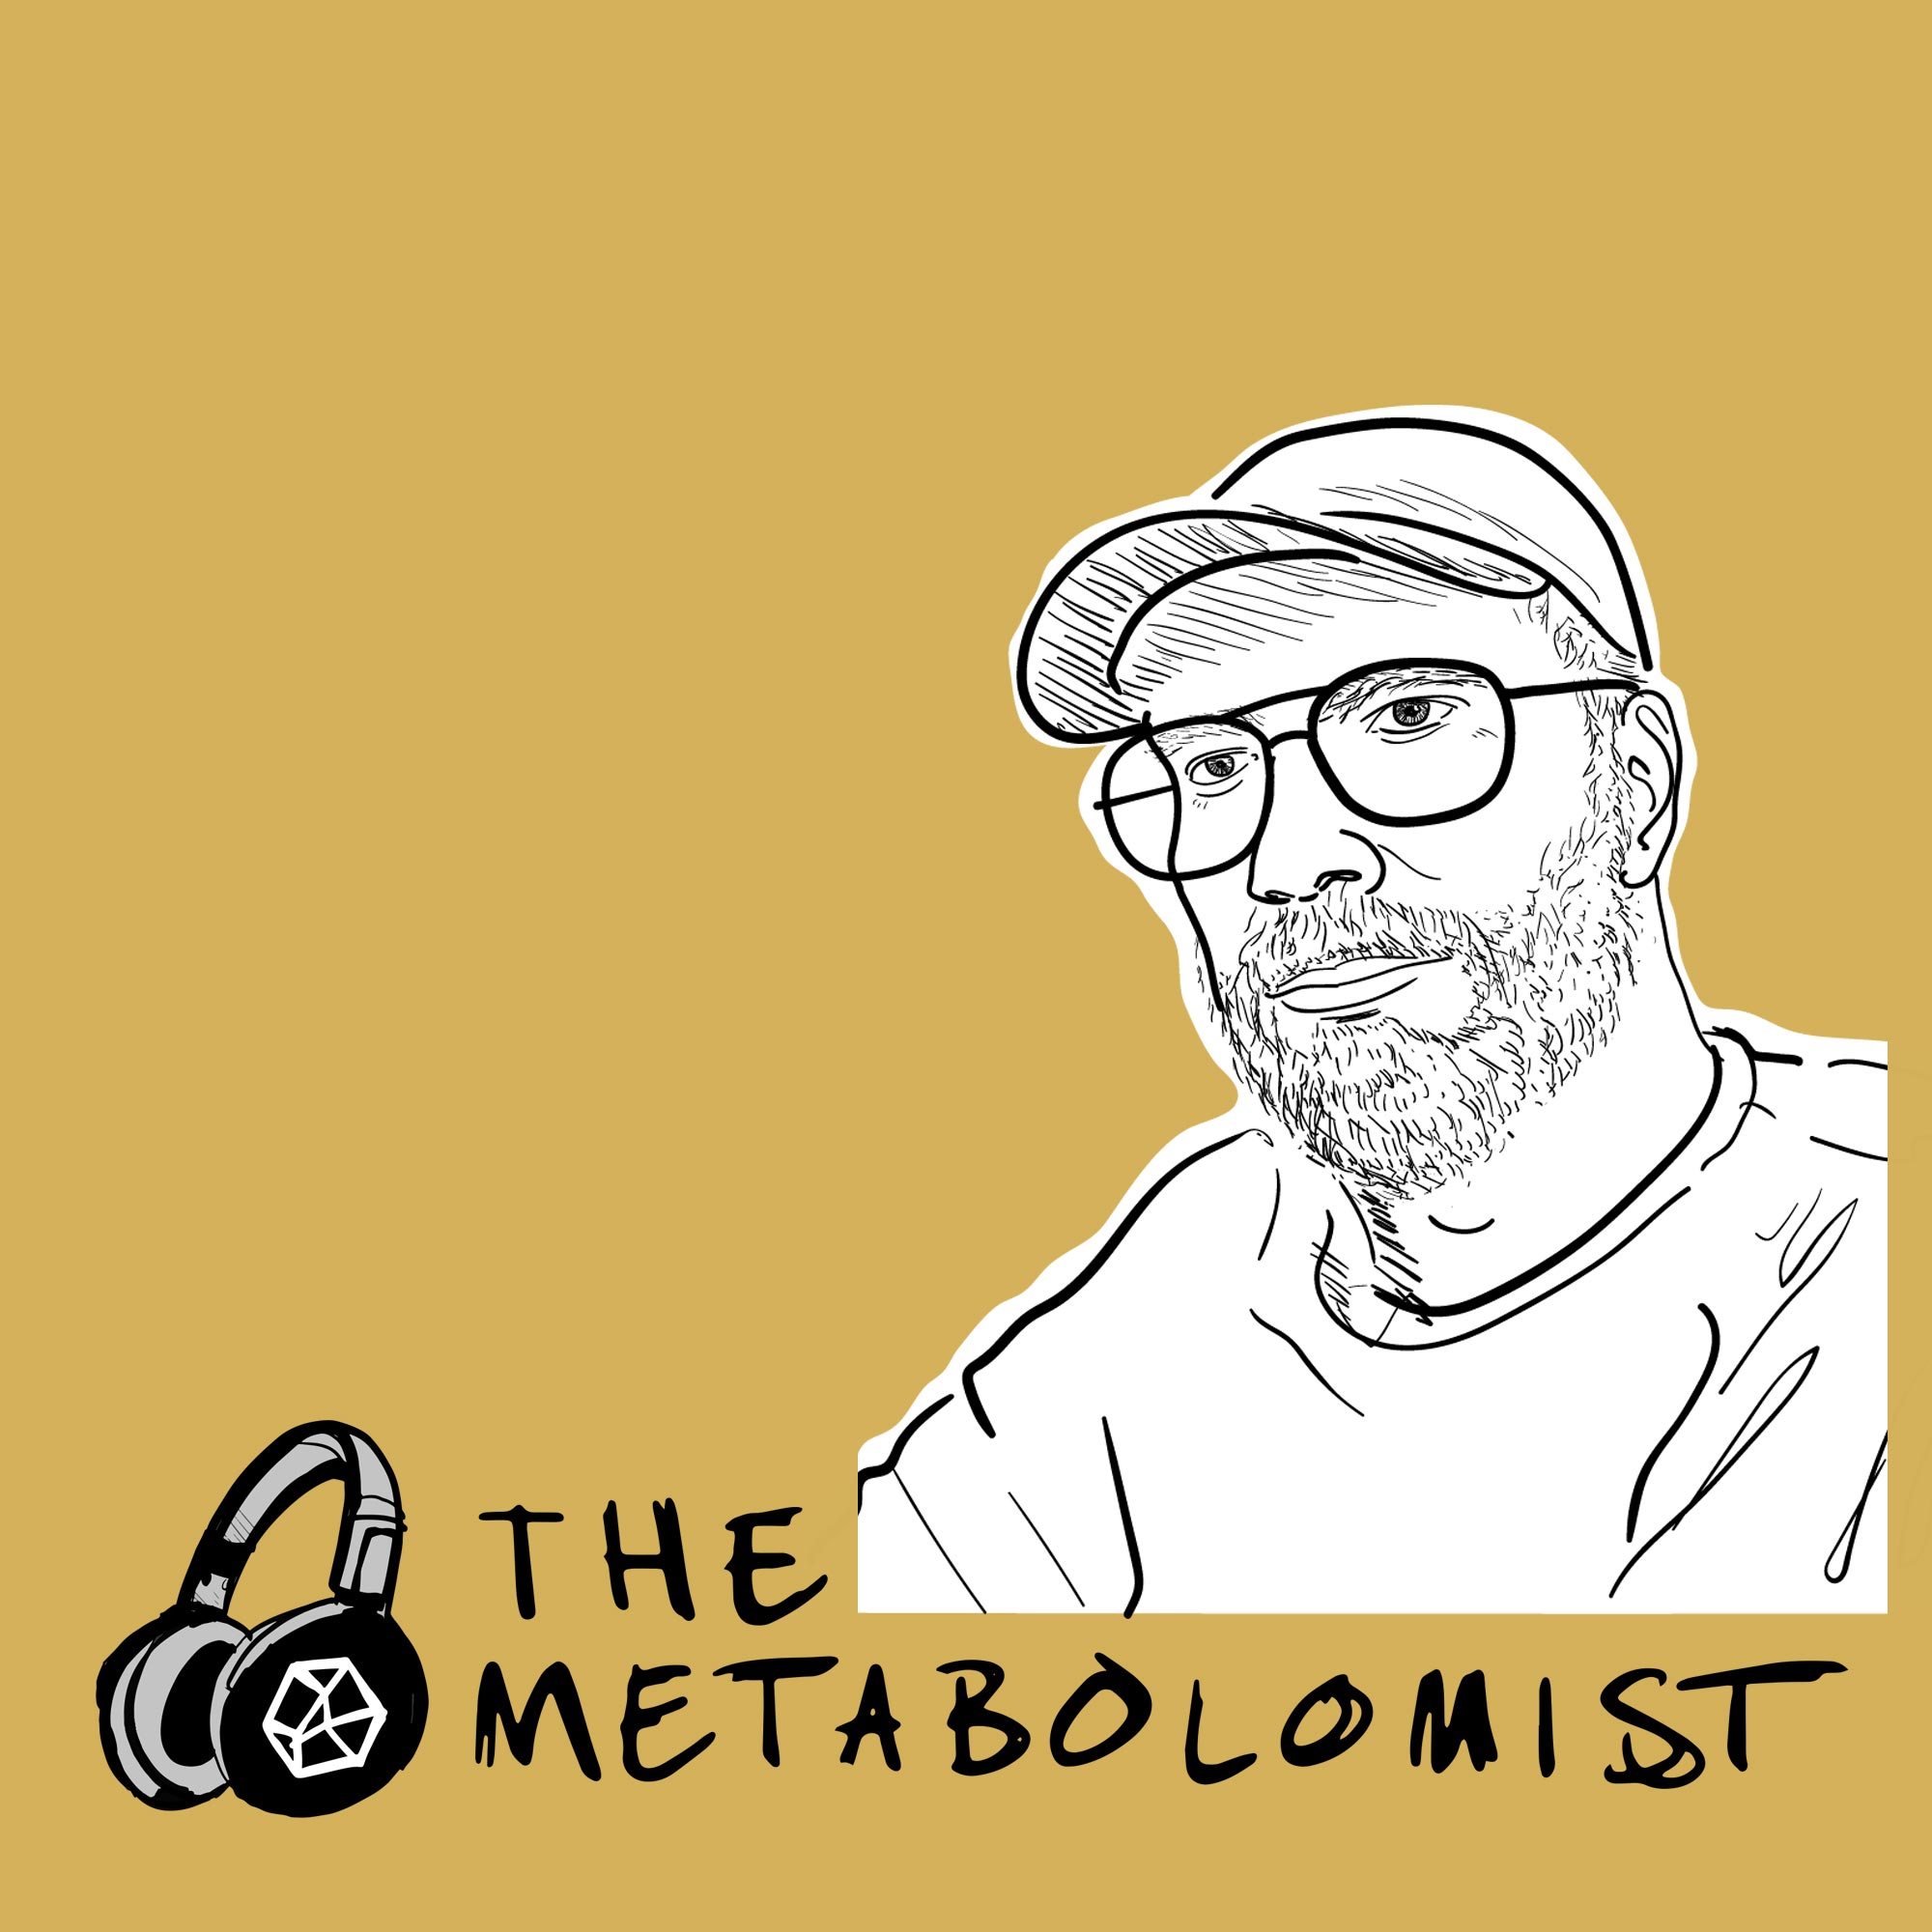 The Metabolomist - David Wishart